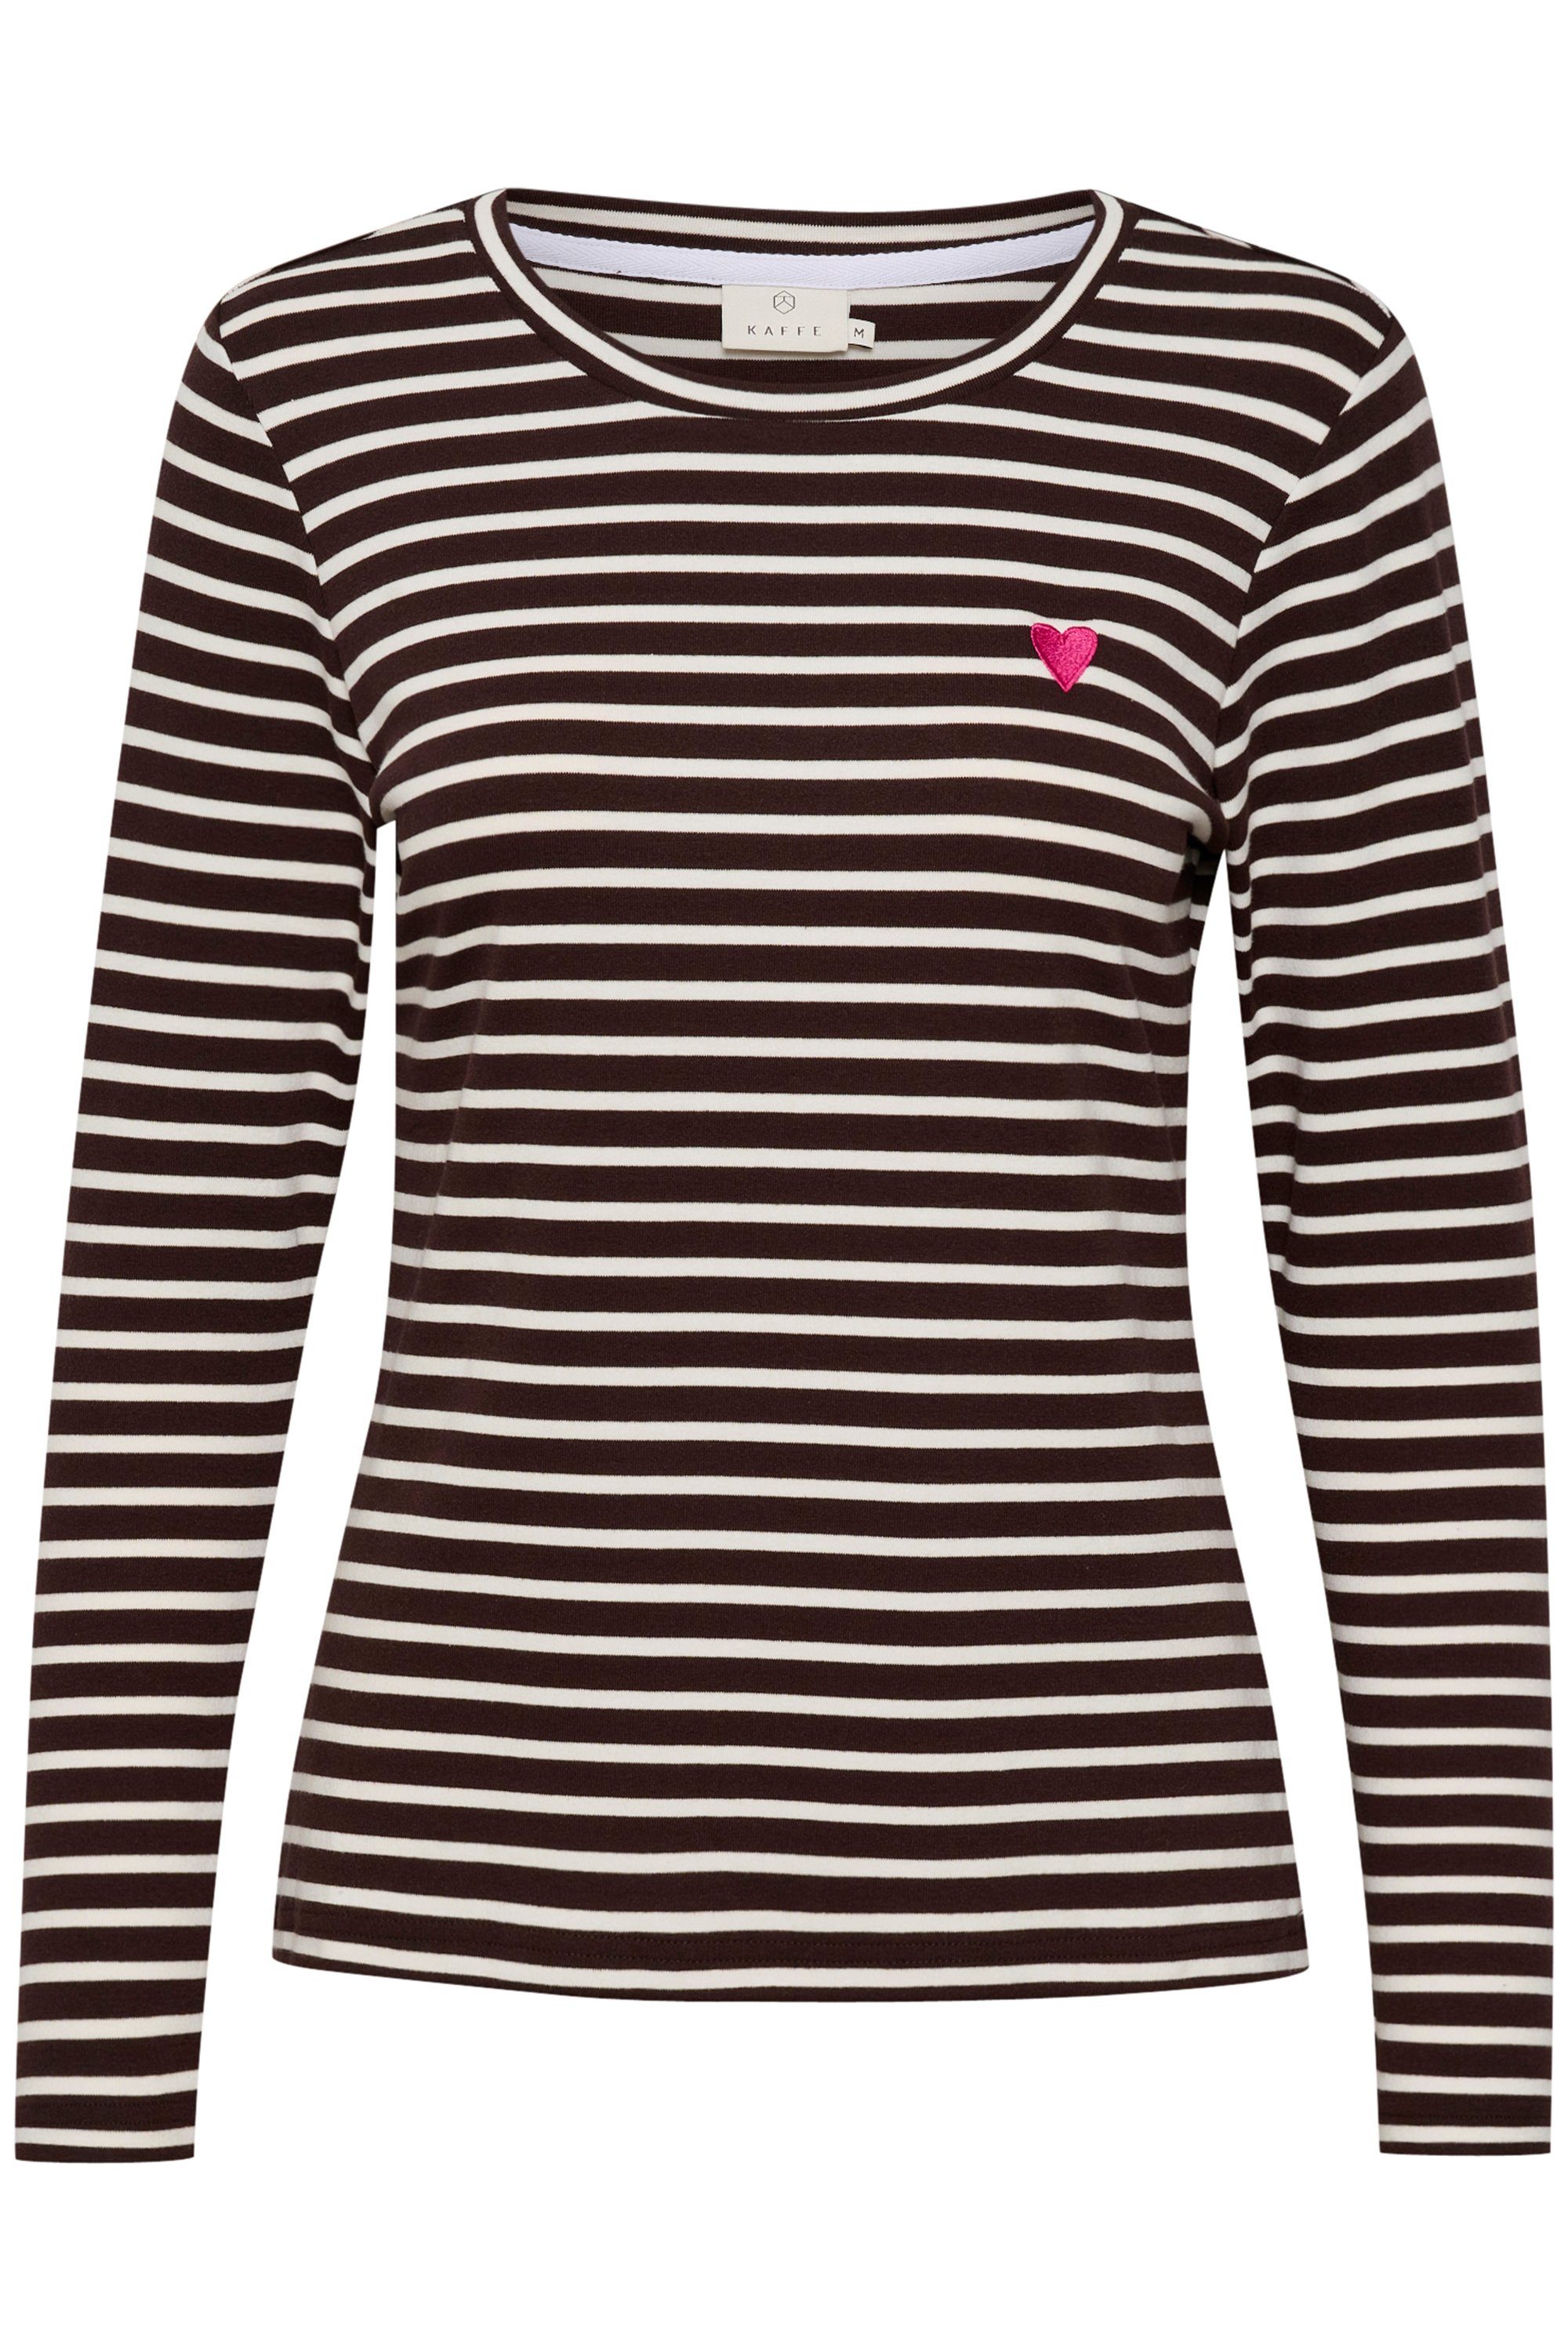 - Java KAFFE MIN pcs Langarmbluse Brown/Chalk 16 Heart Liddy Pink T-Shirt